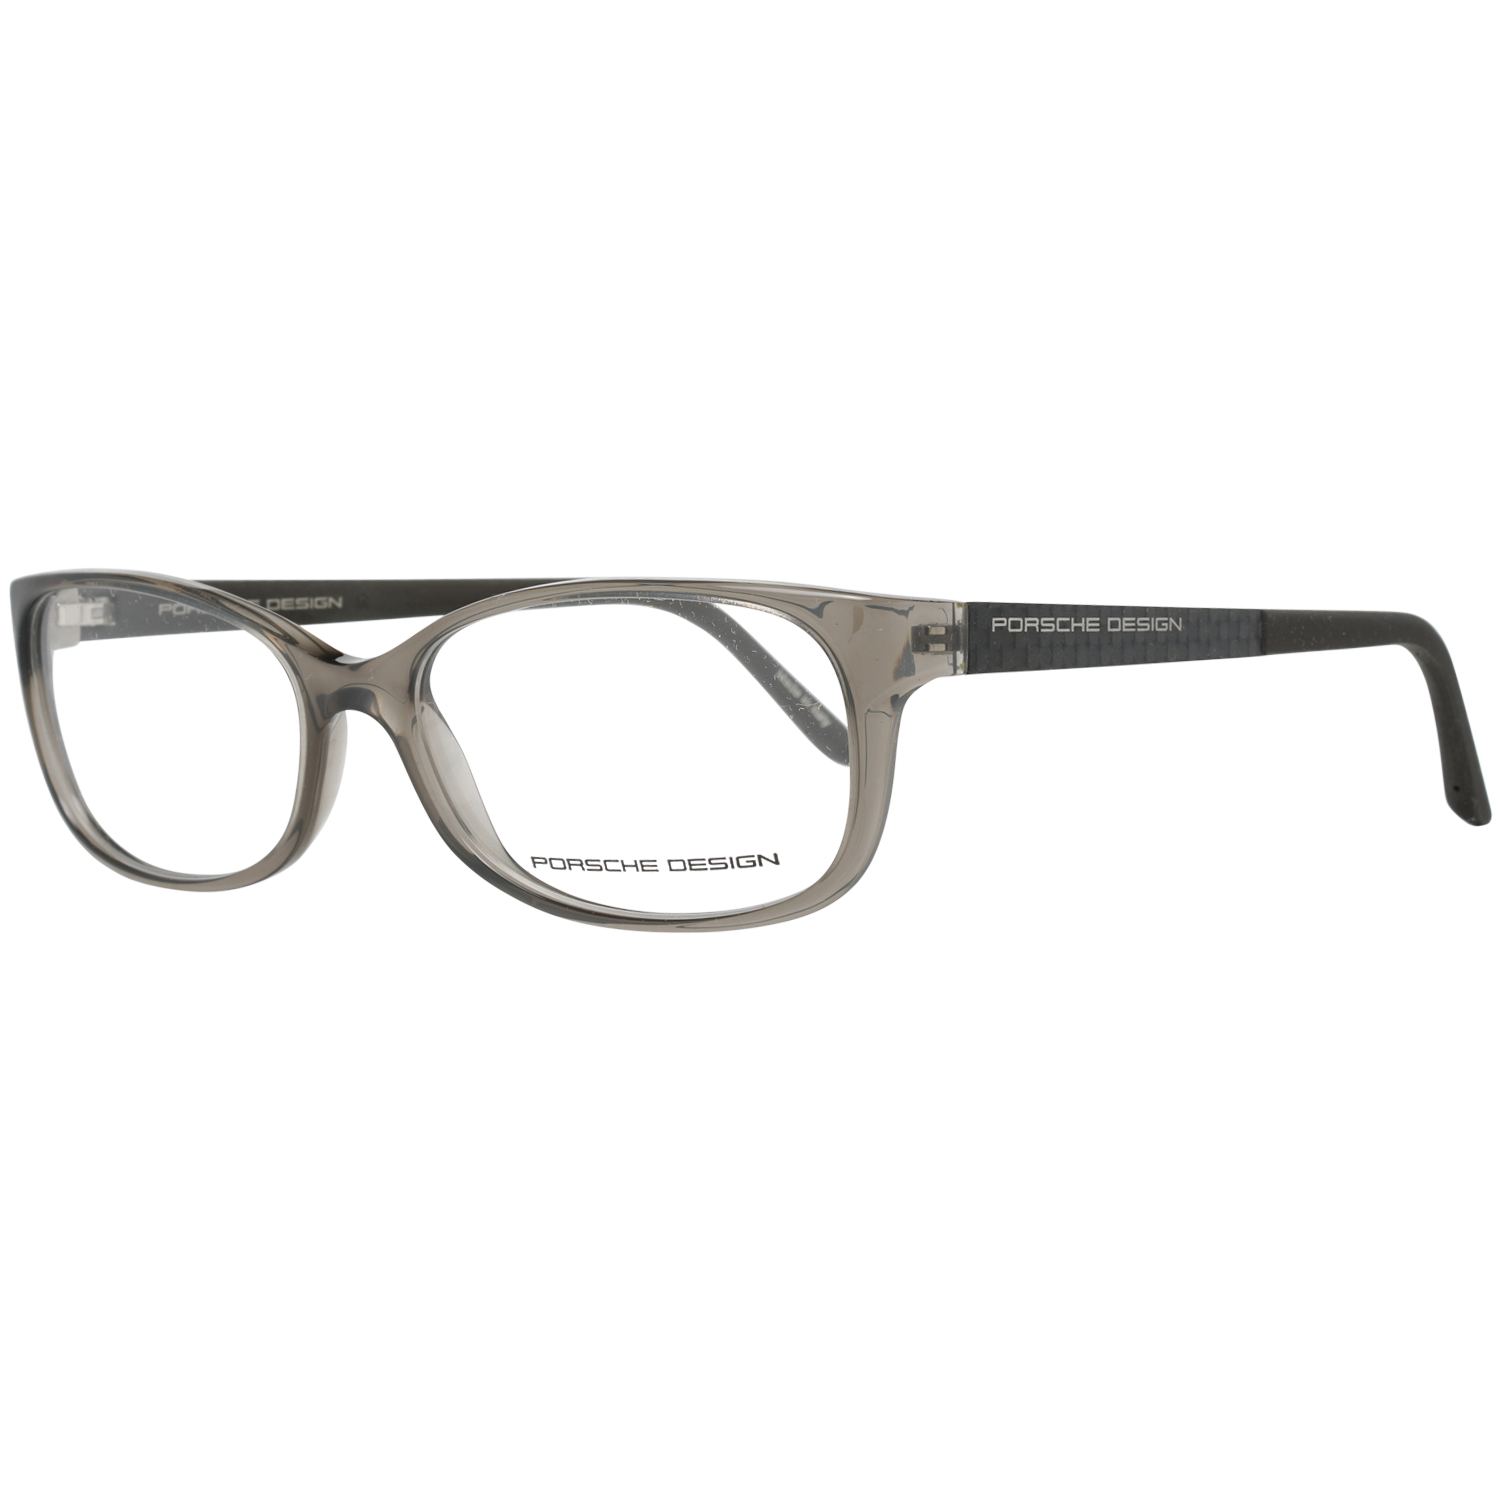 Porsche Design Eyeglasses Porsche Design Glasses Frames P8247 C 55 Eyeglasses Eyewear UK USA Australia 